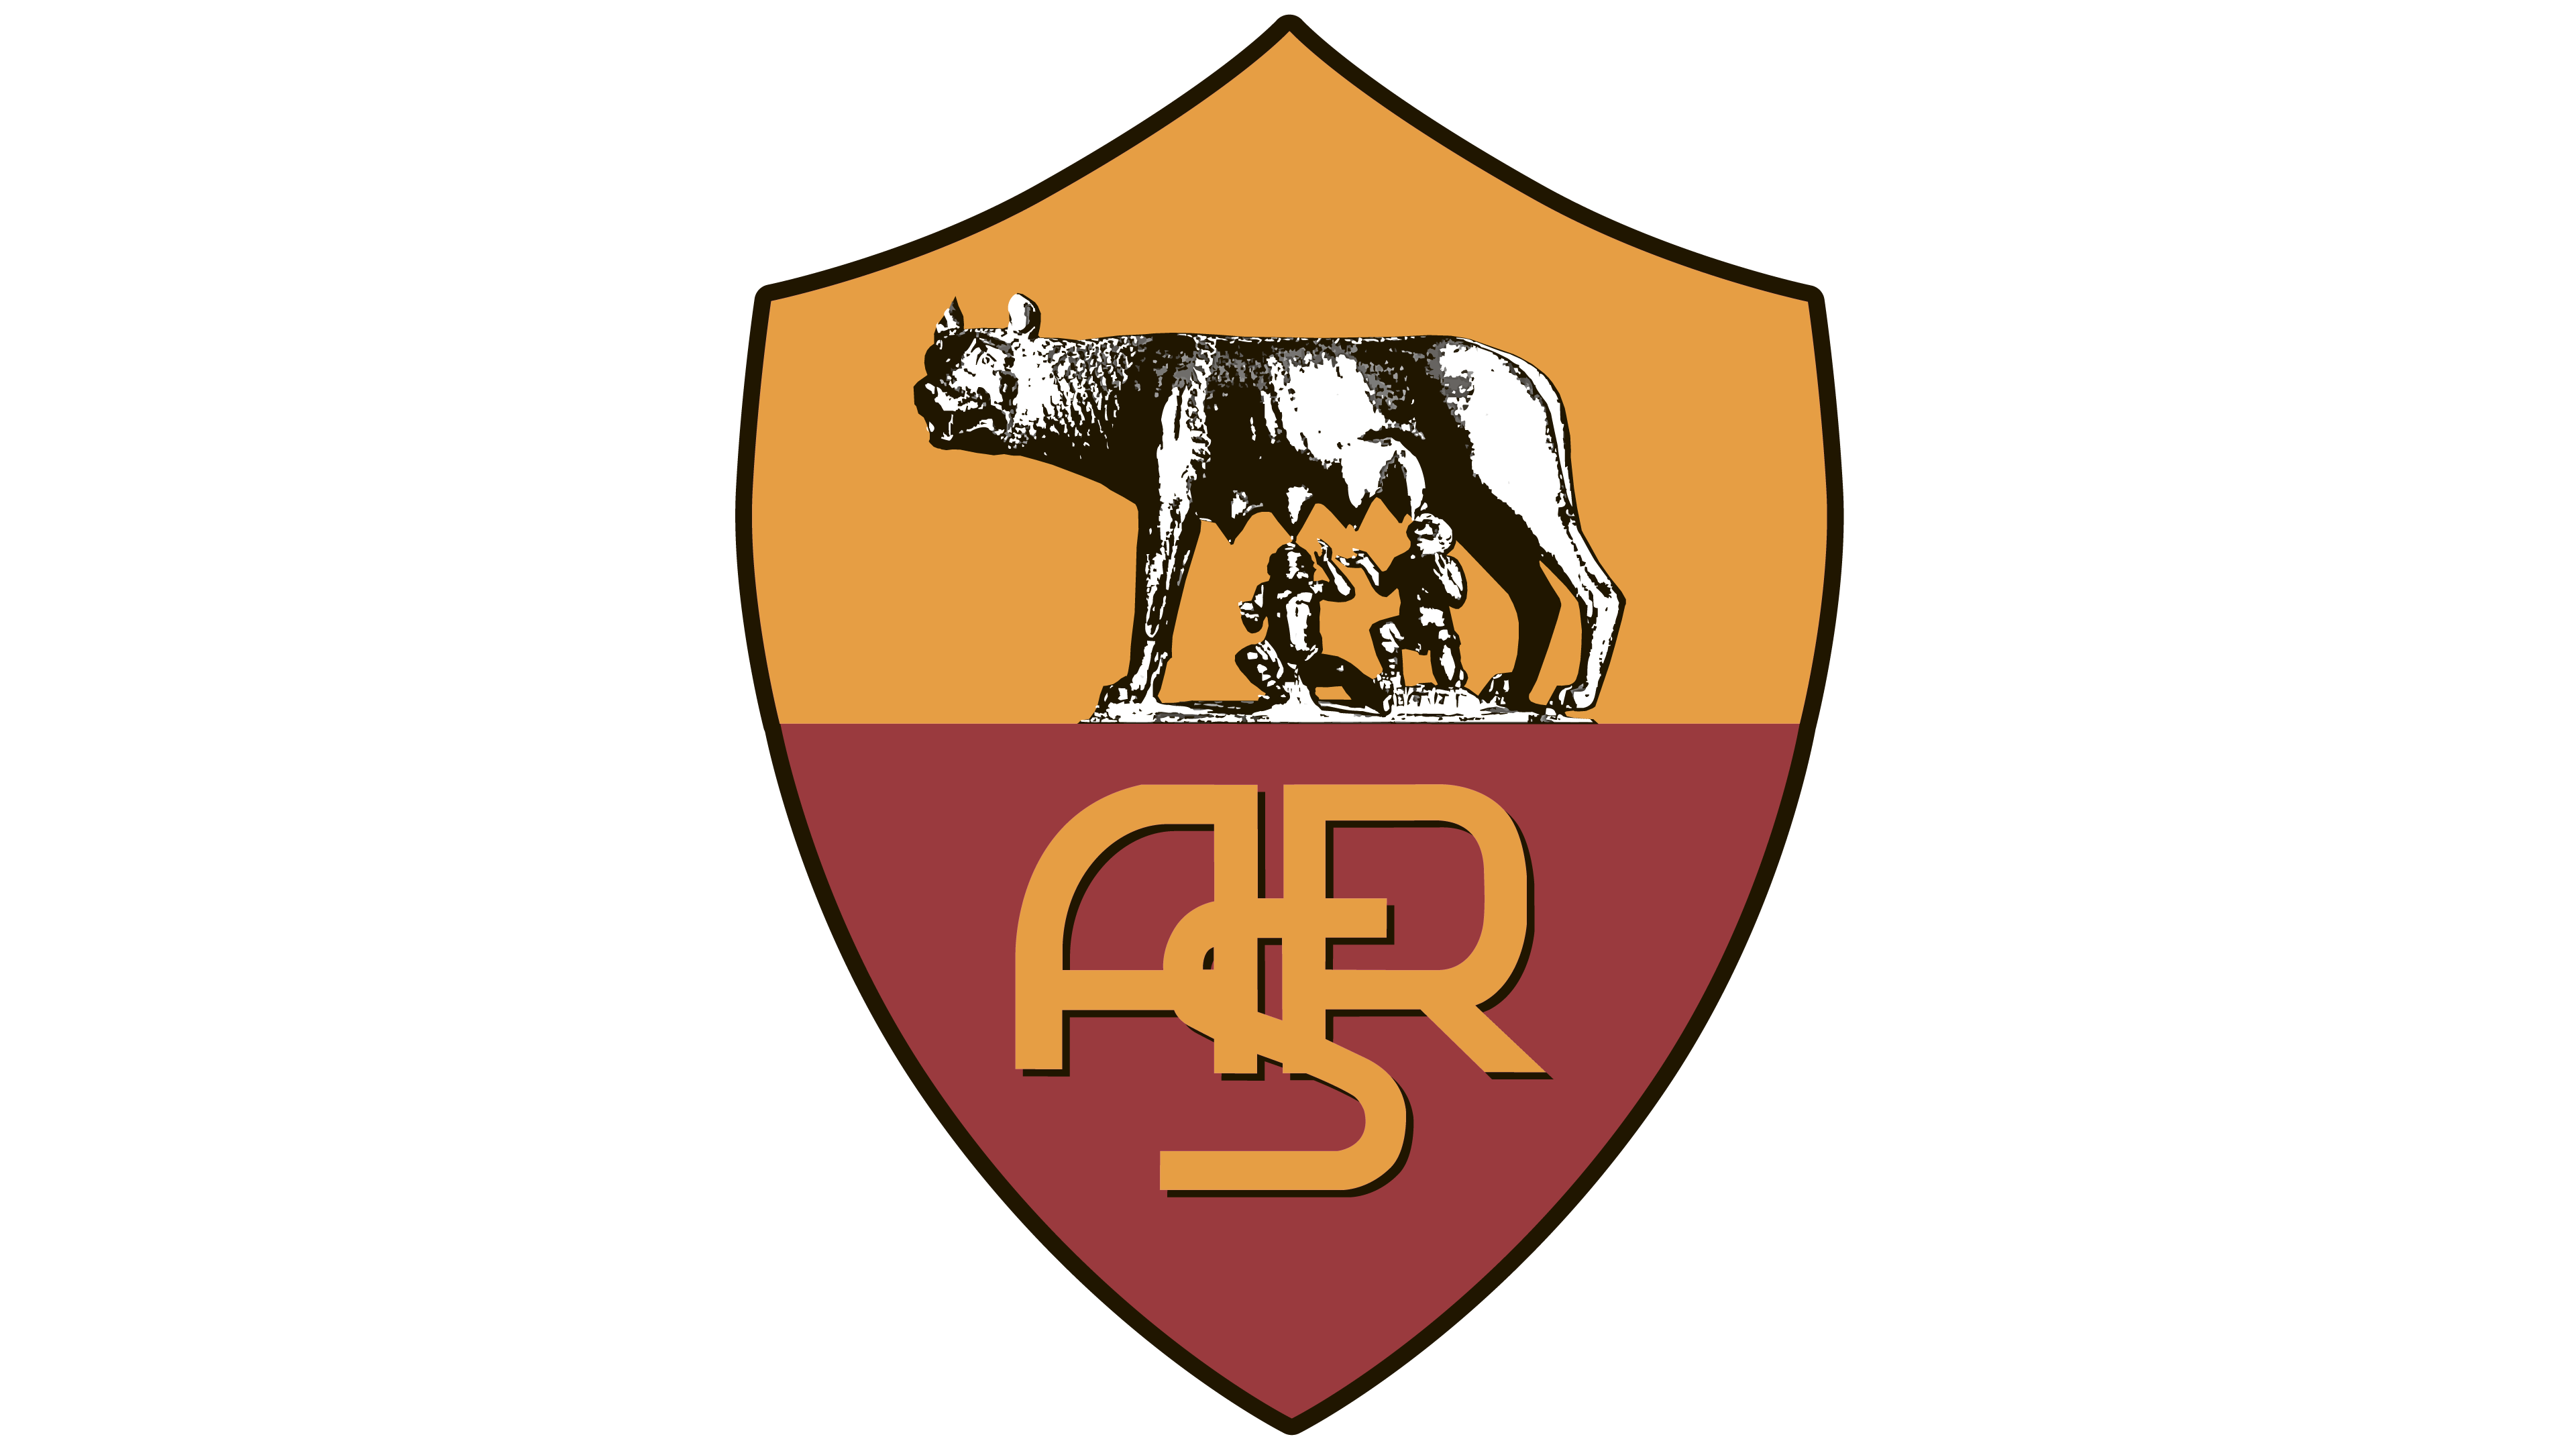 Roman Symbol Logo - Roma logo - Interesting History of the Team Name and emblem